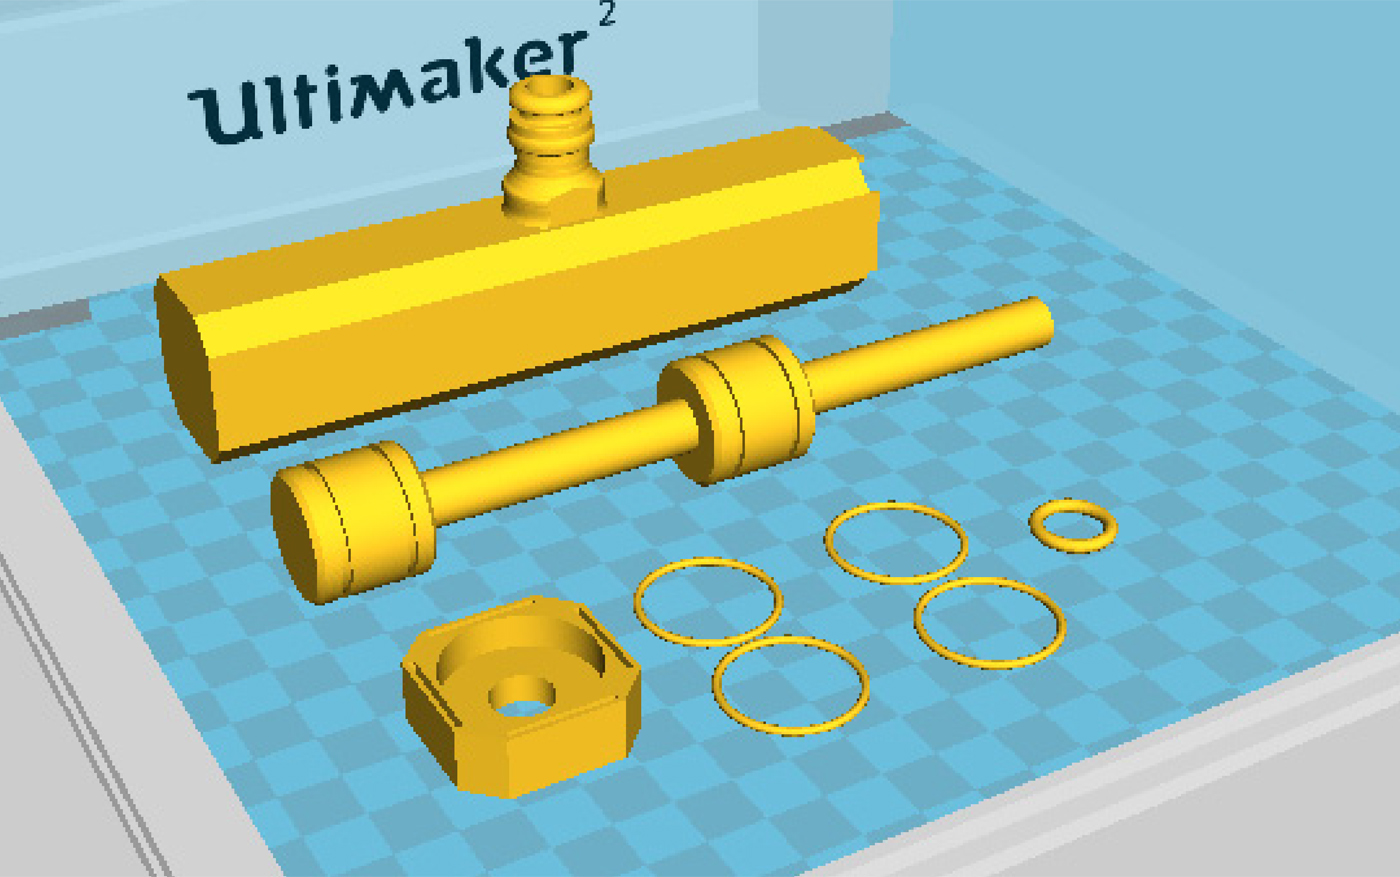 3d-printing 3D printin Formlab form 1+ Ultimaker makerbot scanner Reverse Engineering Advanced Prototyping Prototyping Rapid Prototyping abs PLA Ninjaflex